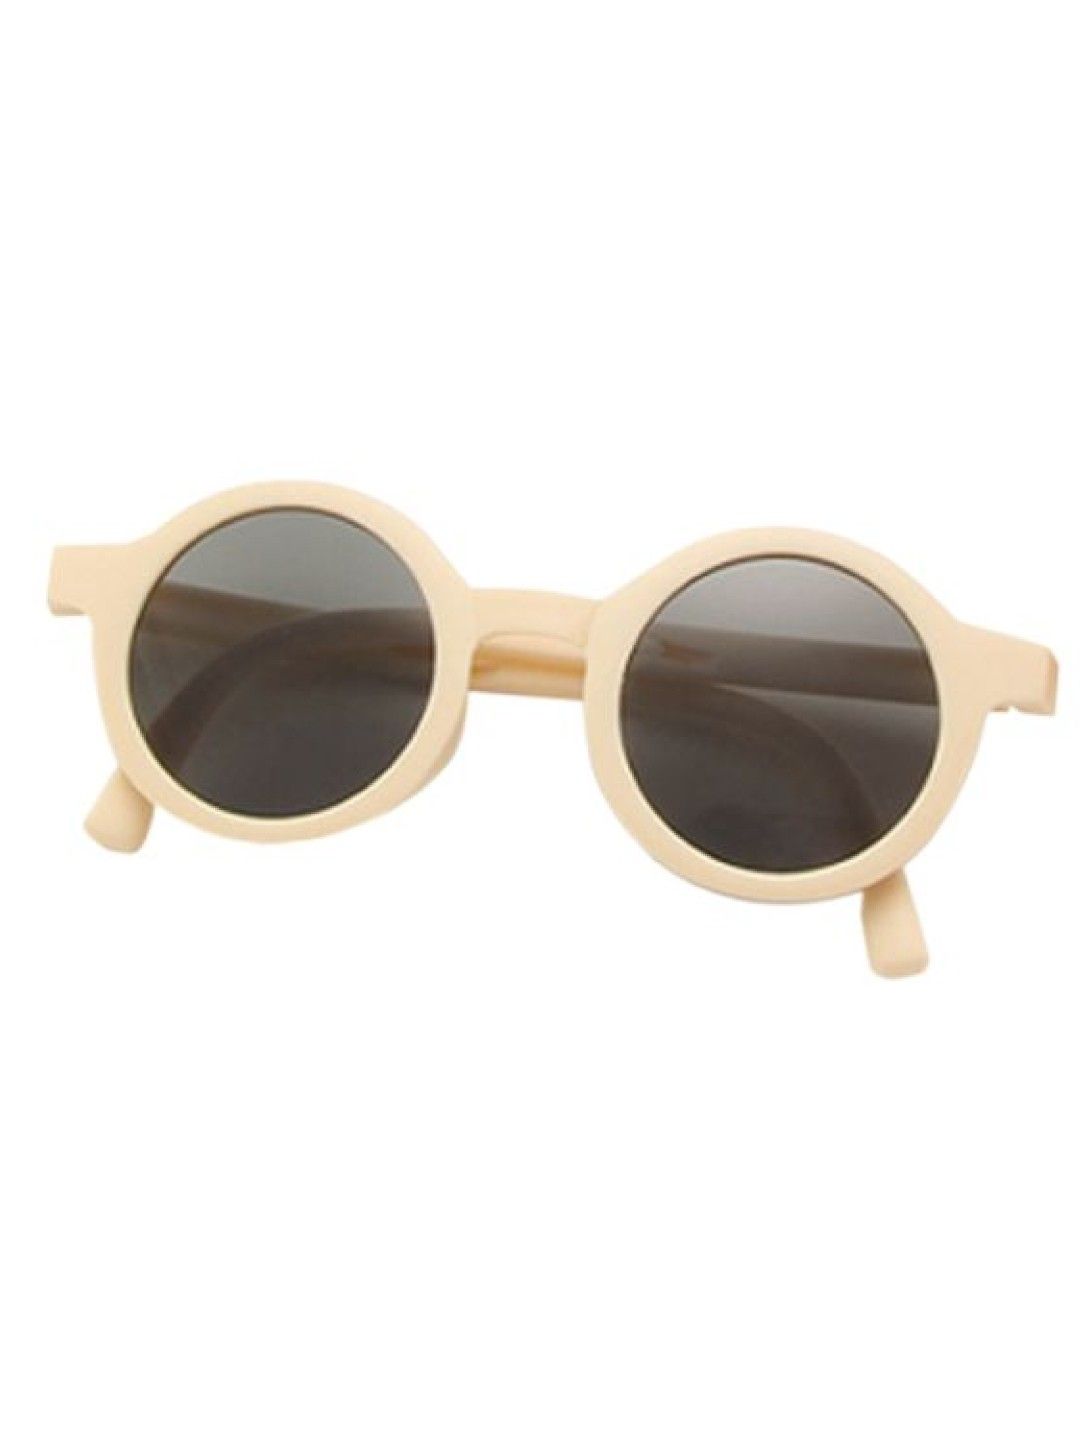 BabyPro Baby Sunglasses Round Eyewear UV Protection Accessories